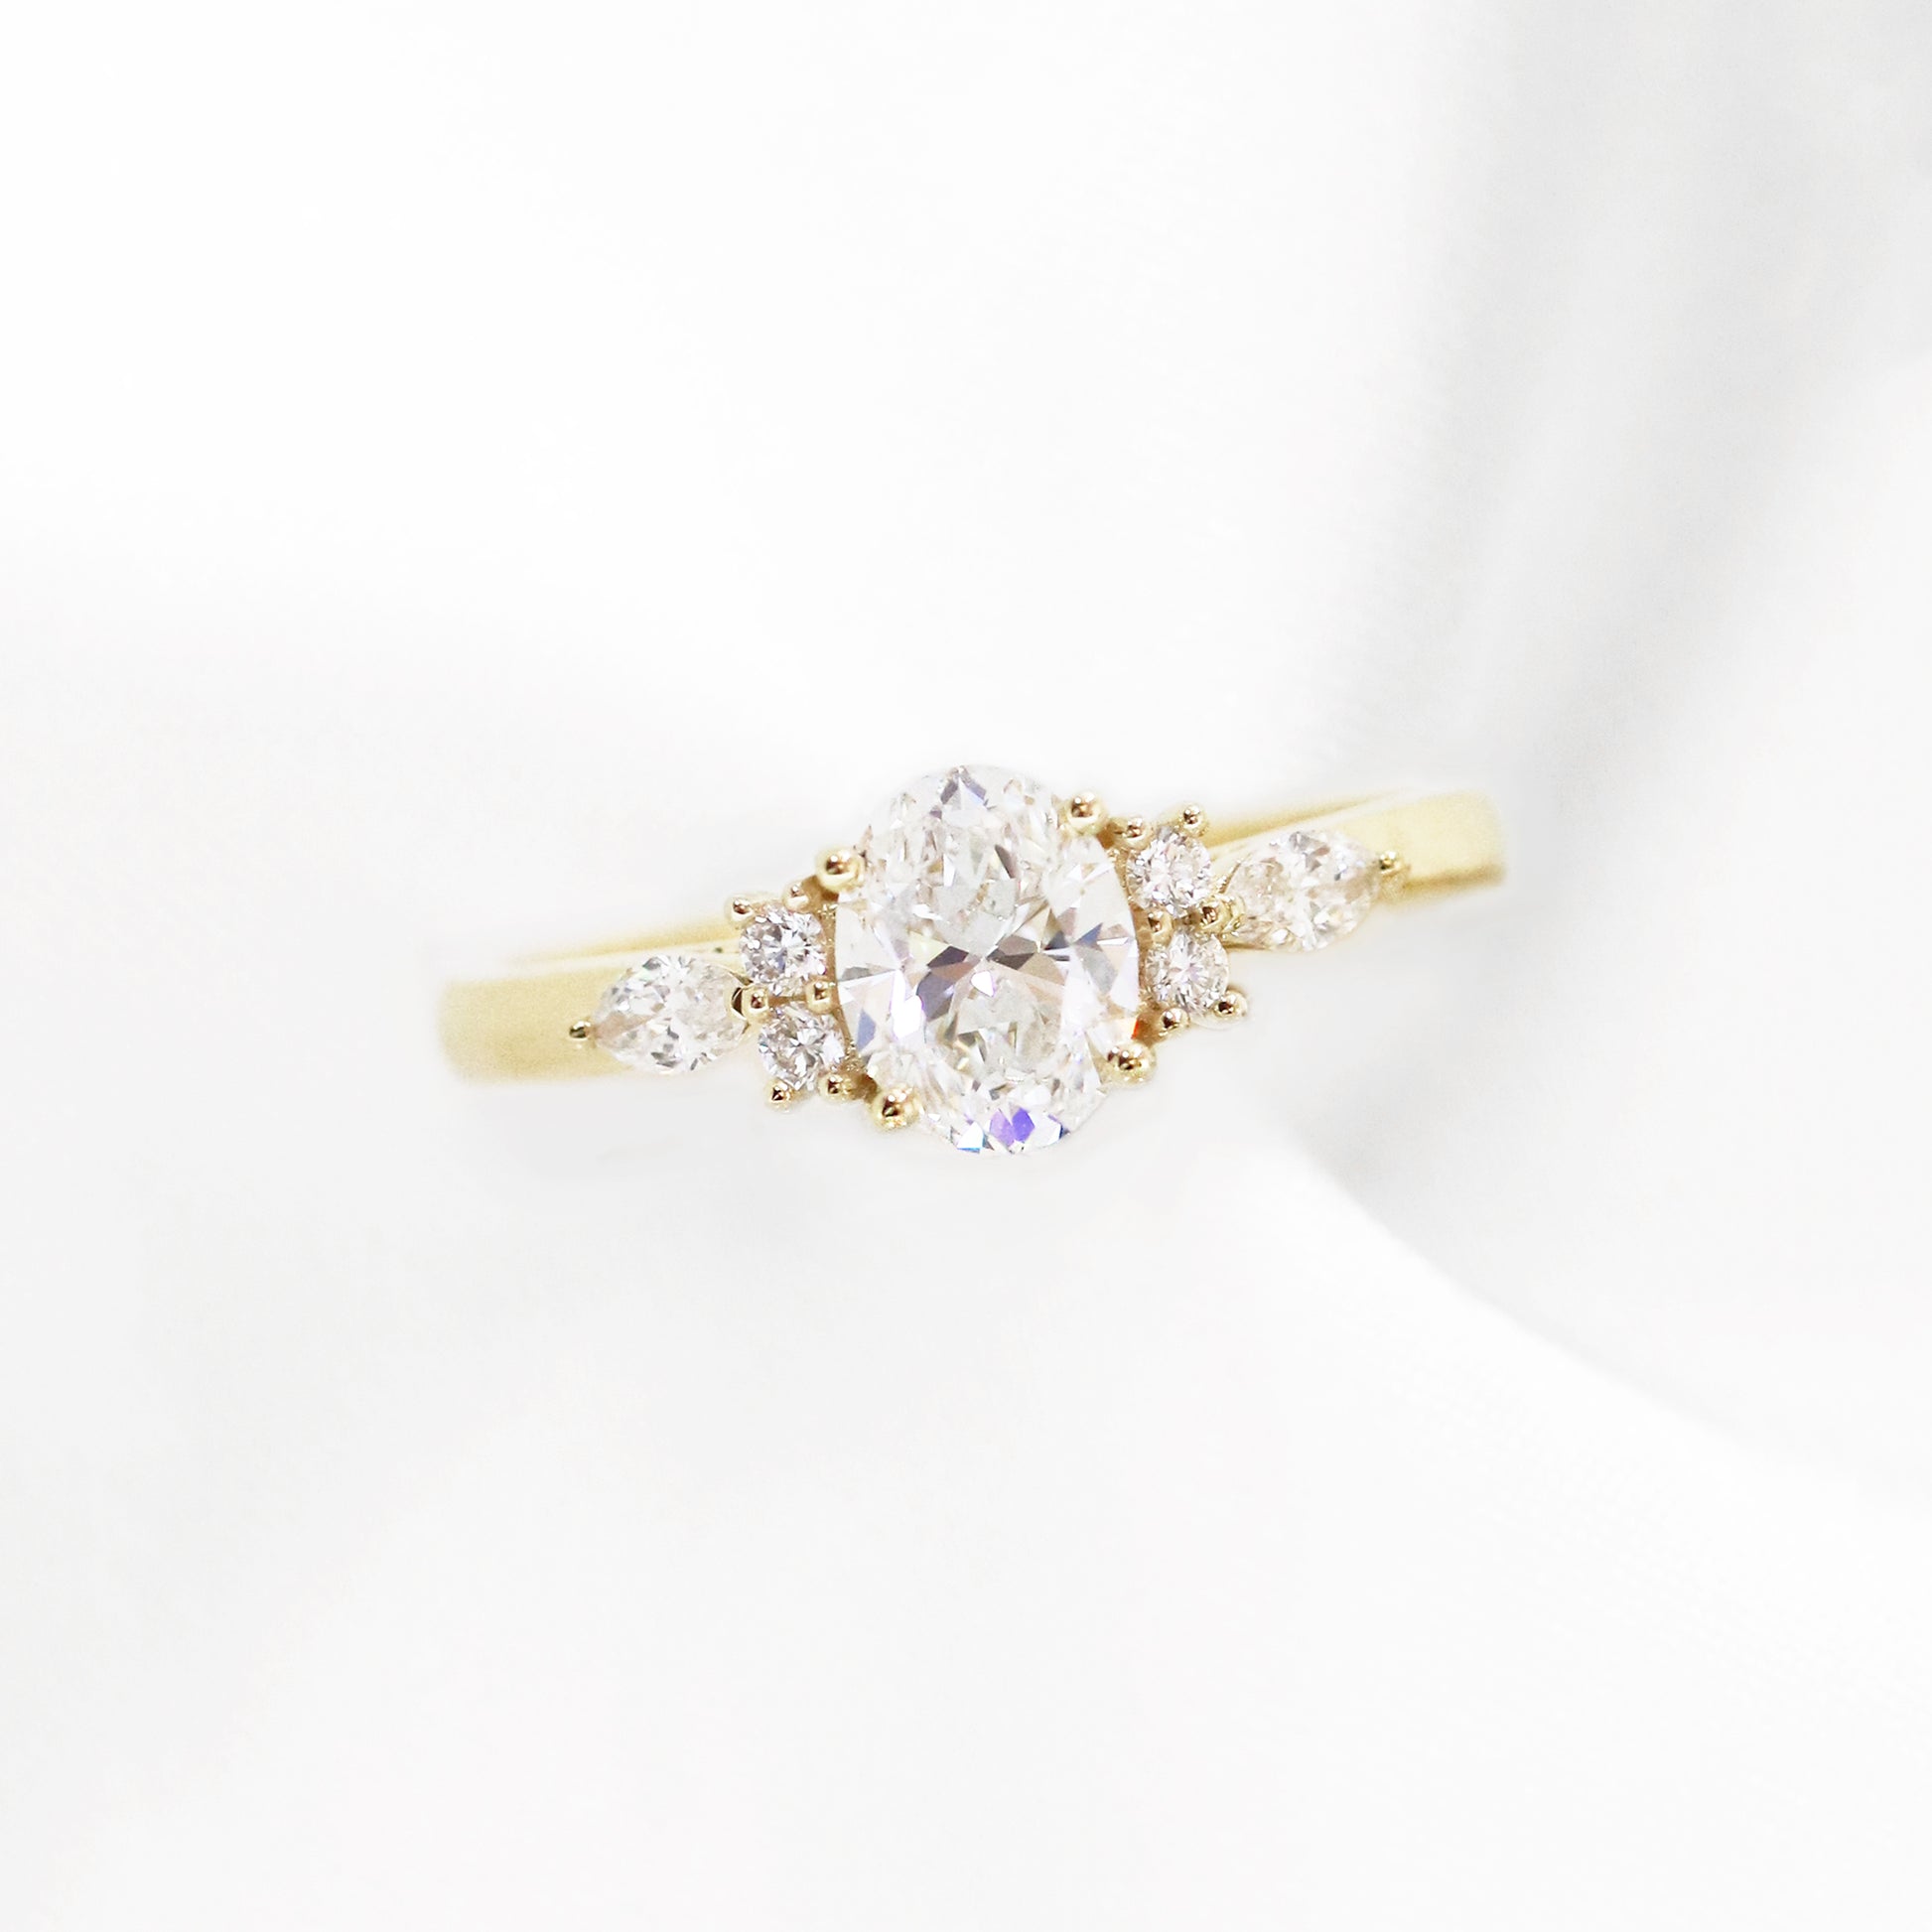 Euphorbia Vintage 18k Yellow Gold 4-Prong Oval Diamond Engagement Ring Setting 18k黃金四爪復古求婚鑽石戒指款式